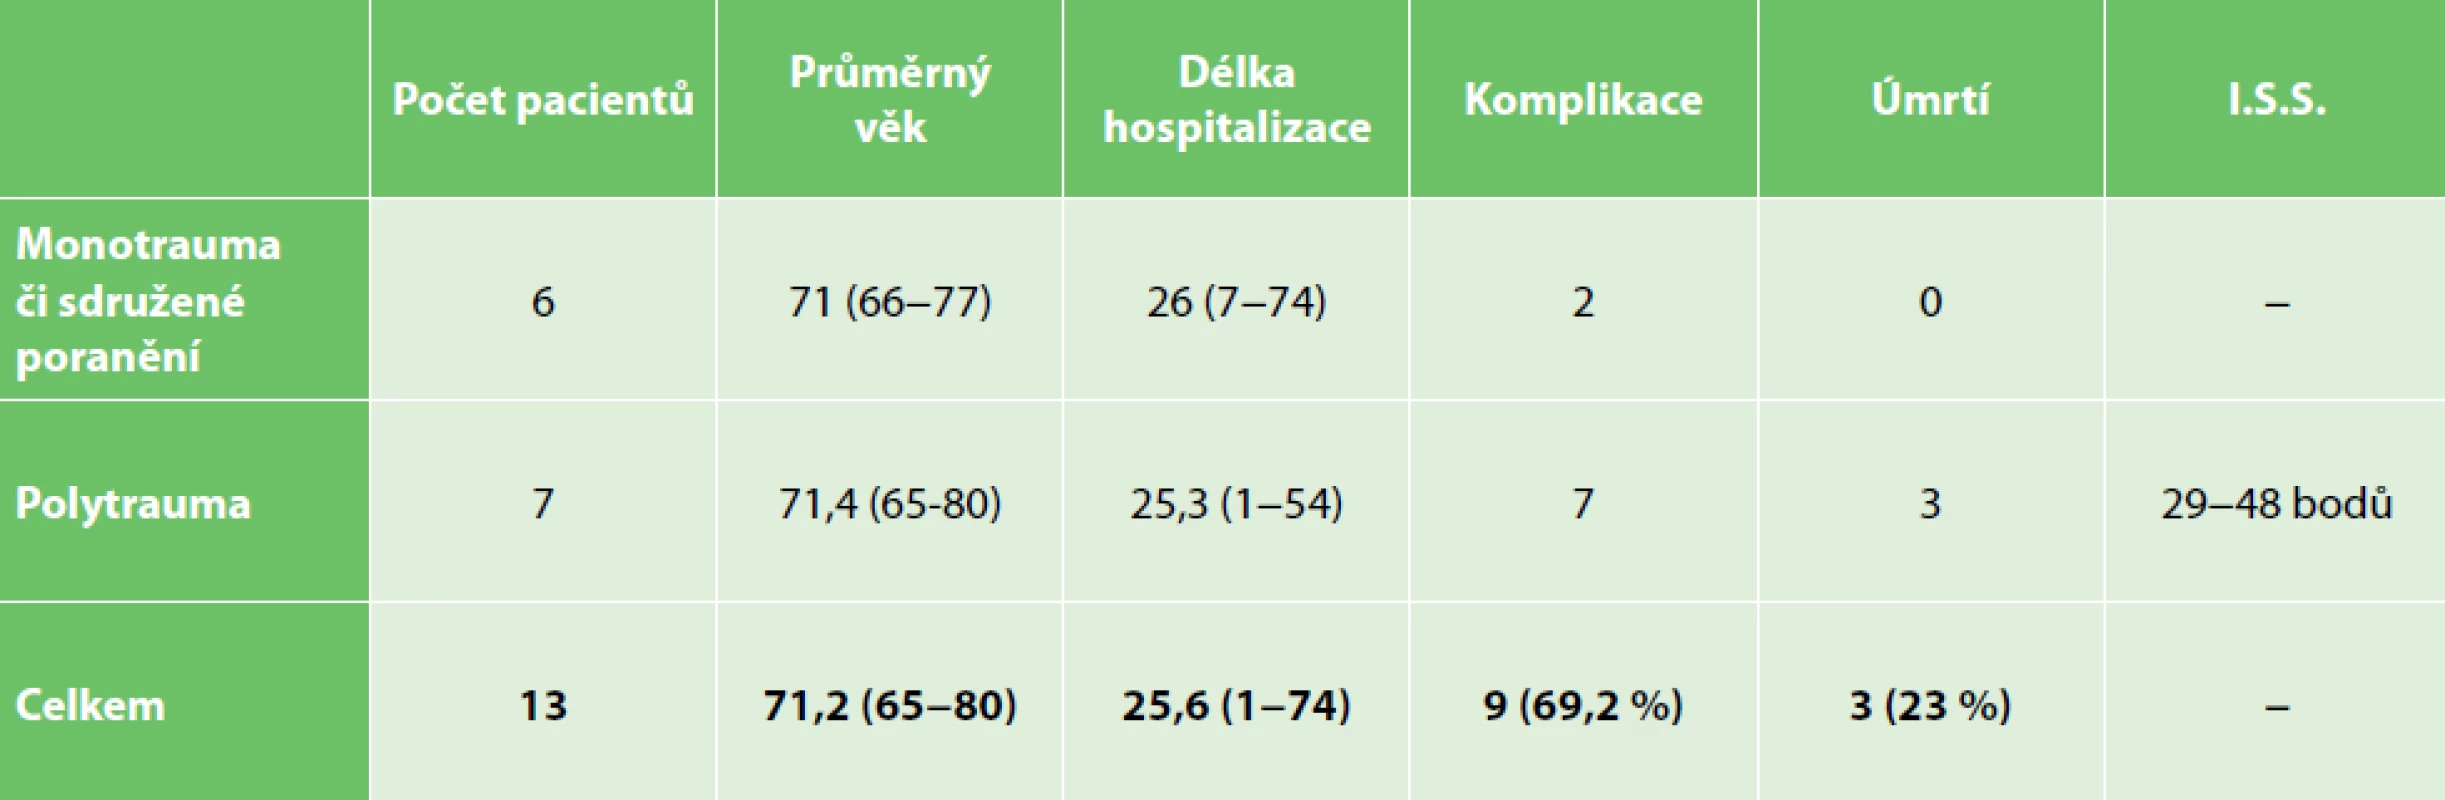 Splenektomie u seniorů pro trauma sleziny<br>
Tab. 2: Senior patients after post-traumatic splenectomy